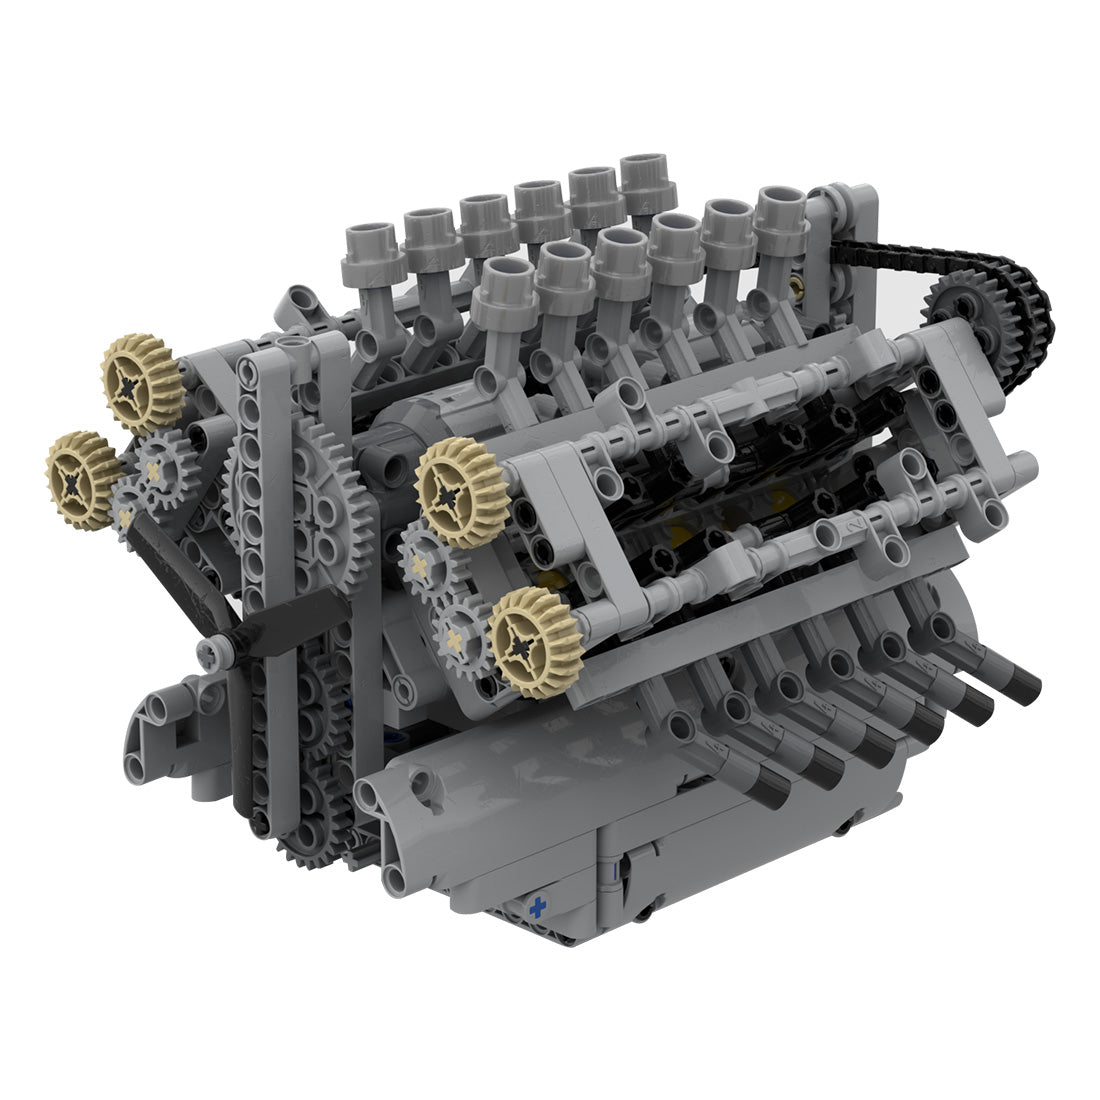 MOC-40128 V12 Engine with Gearbox Sci-fi Engine Model Building Blocks Toy Set 789PCS